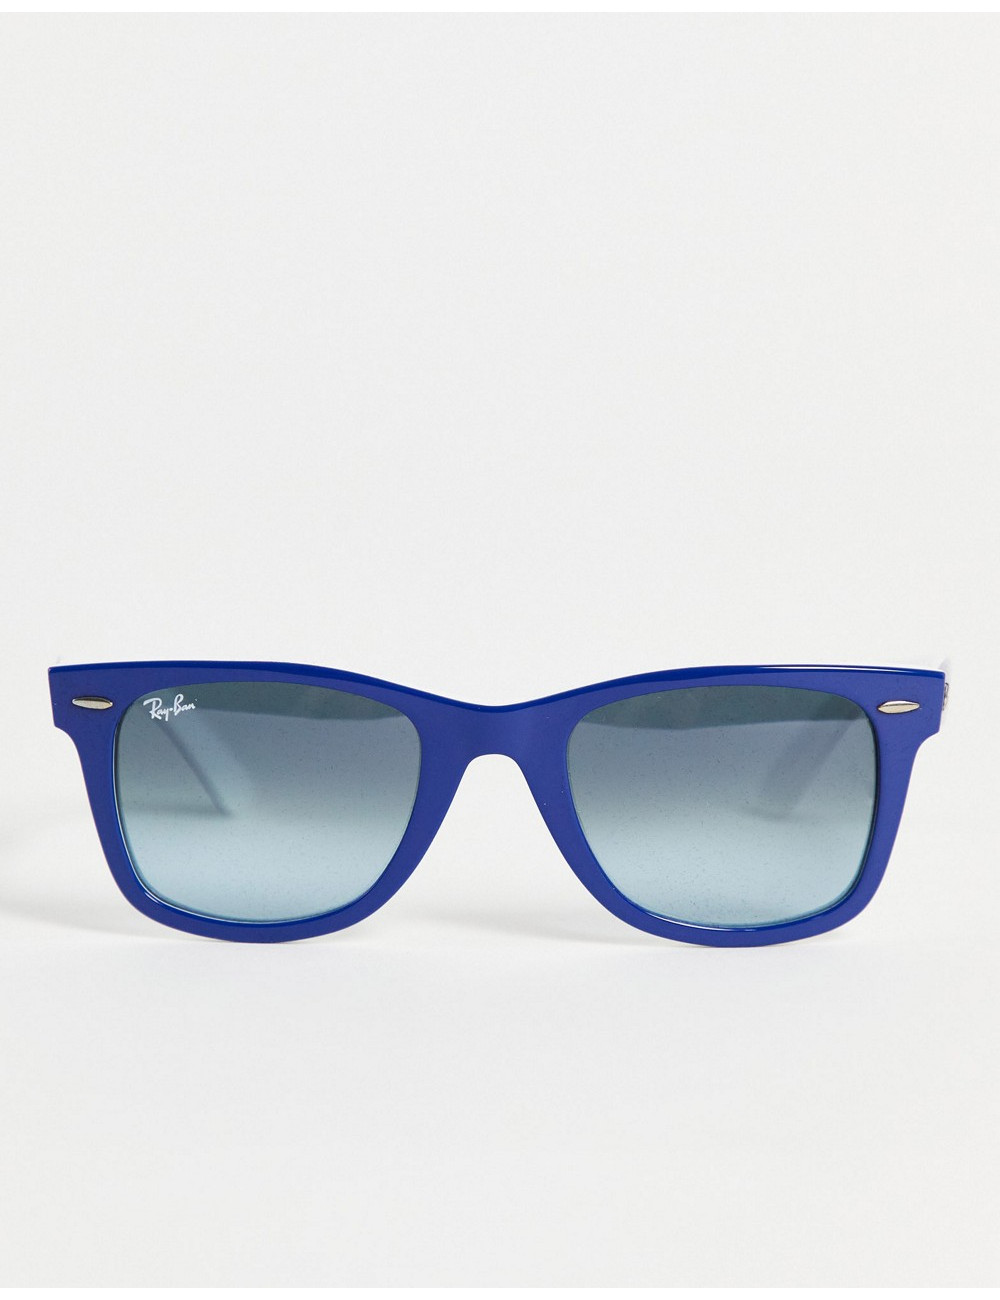 Rayban square lens sunglasses